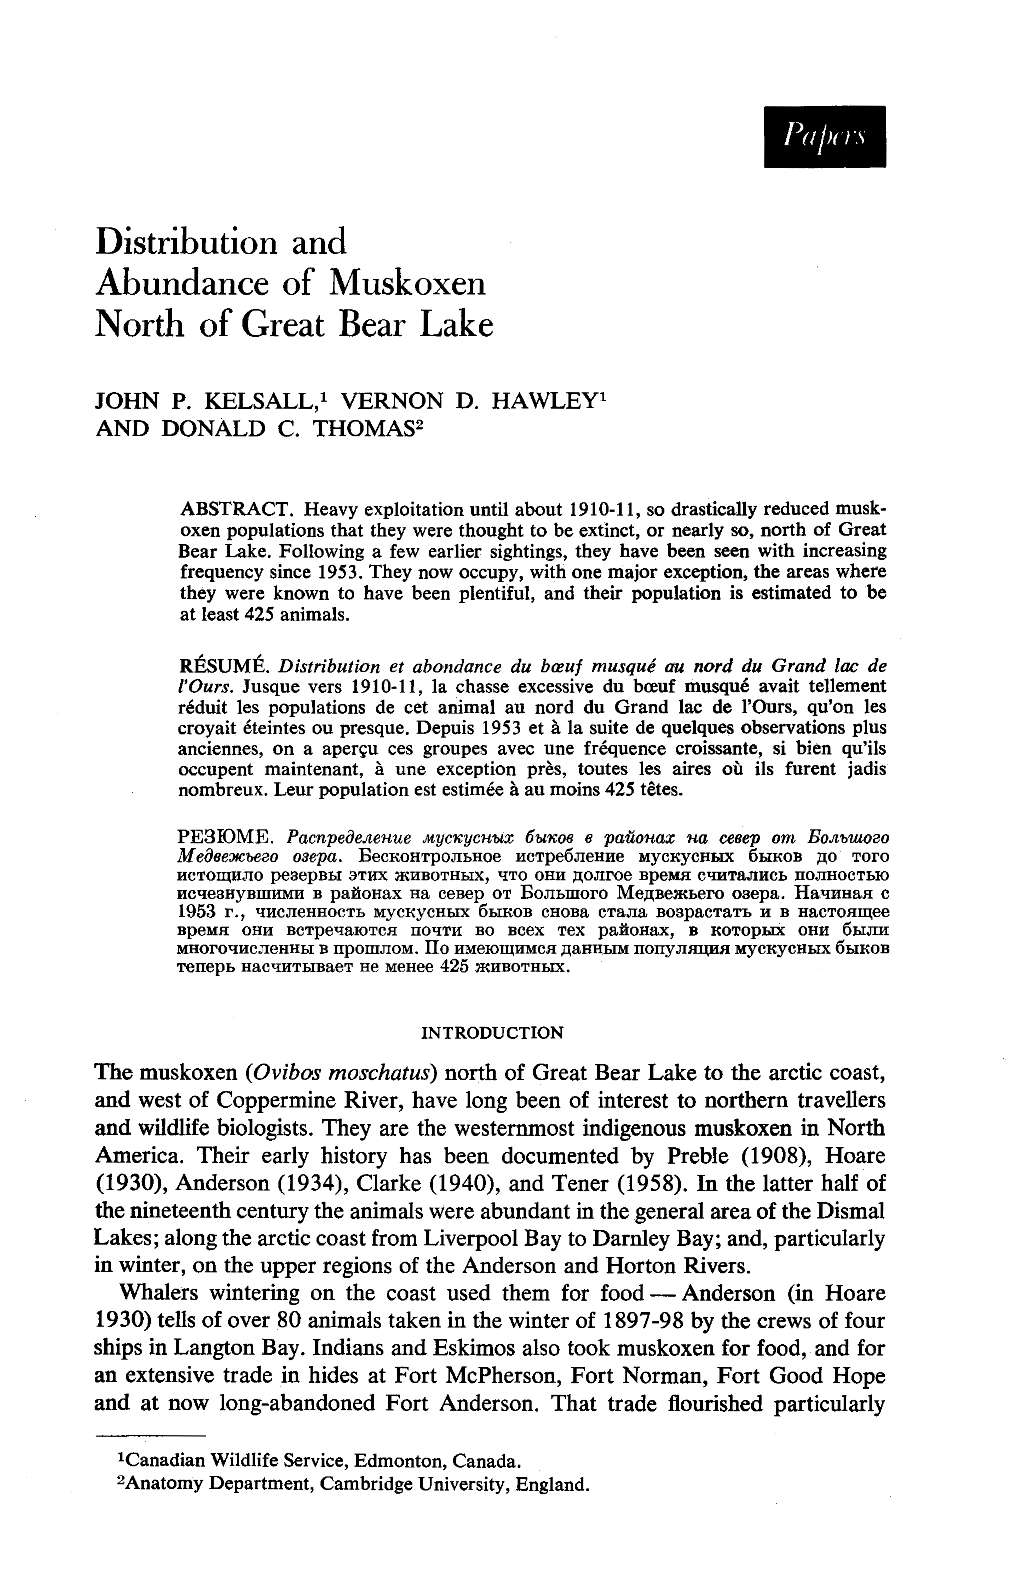 Distribution and Abundance of Muskoxen North of Great Bear Lake